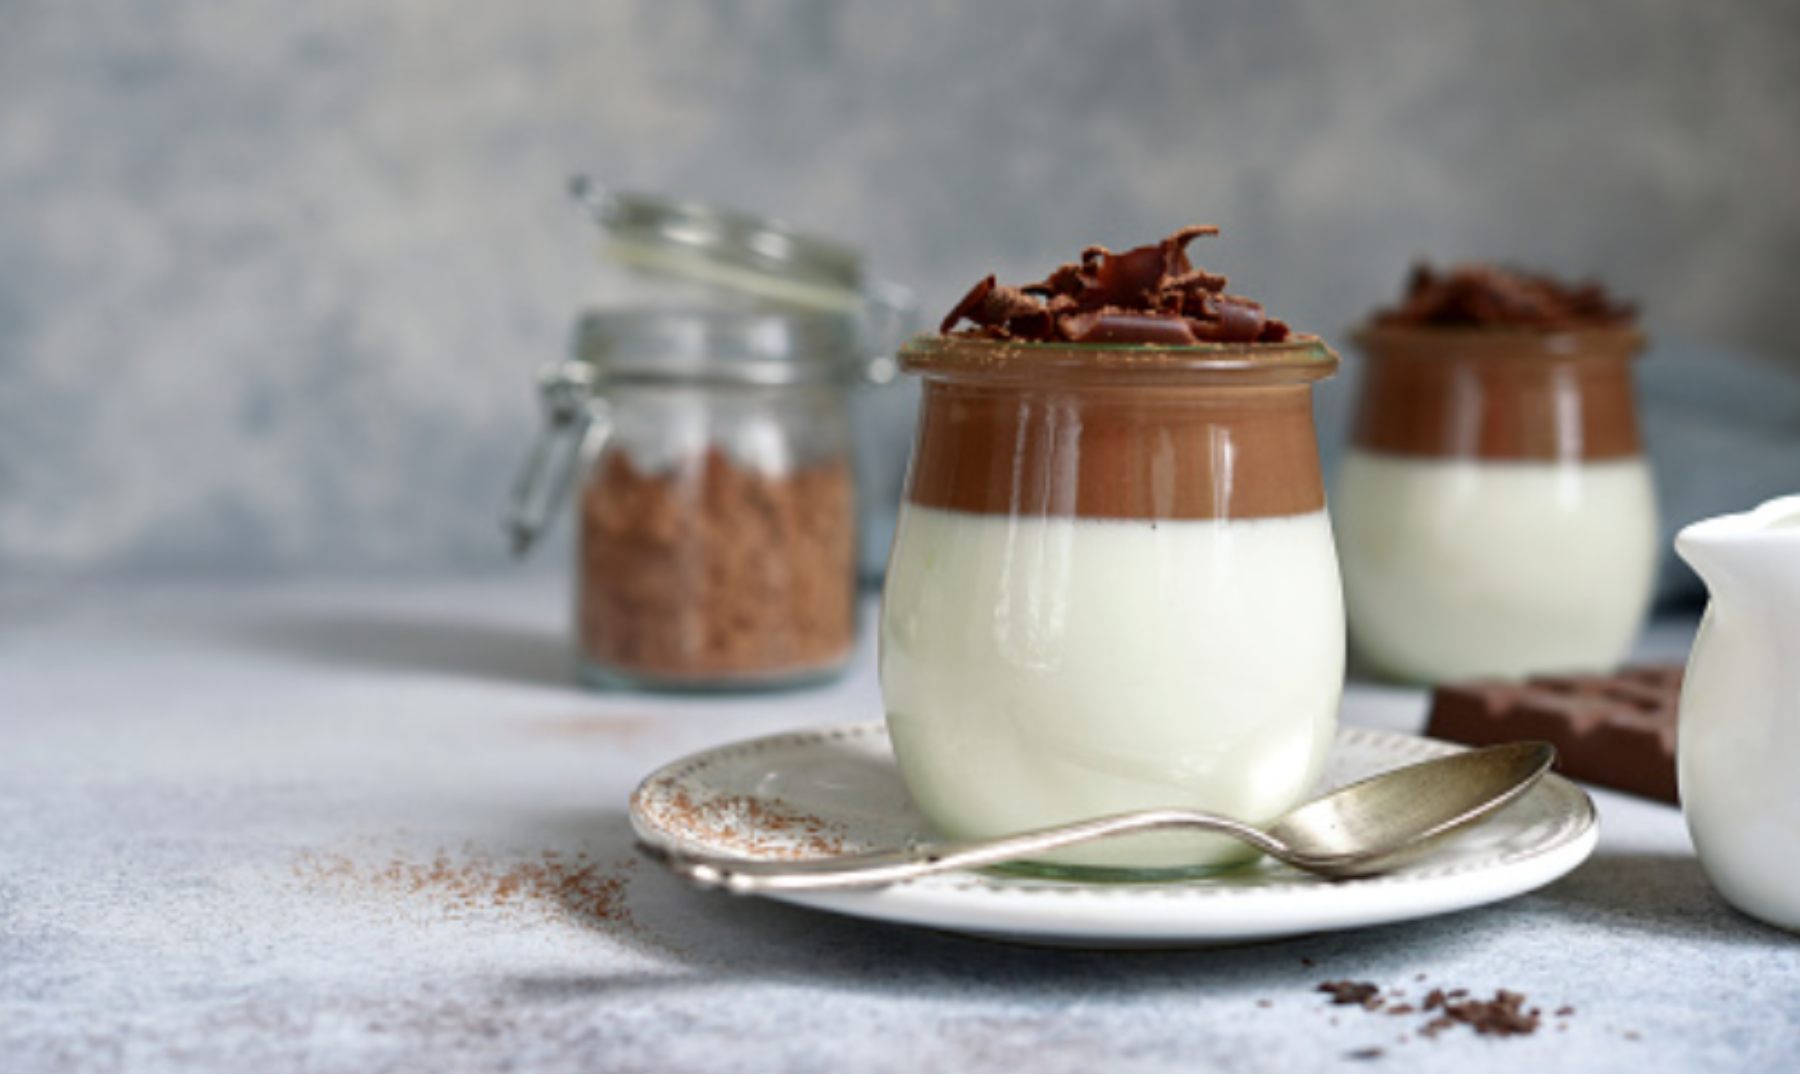 Gelatina de chocolate vegana, receta de postre ligero con 3 ingredientes